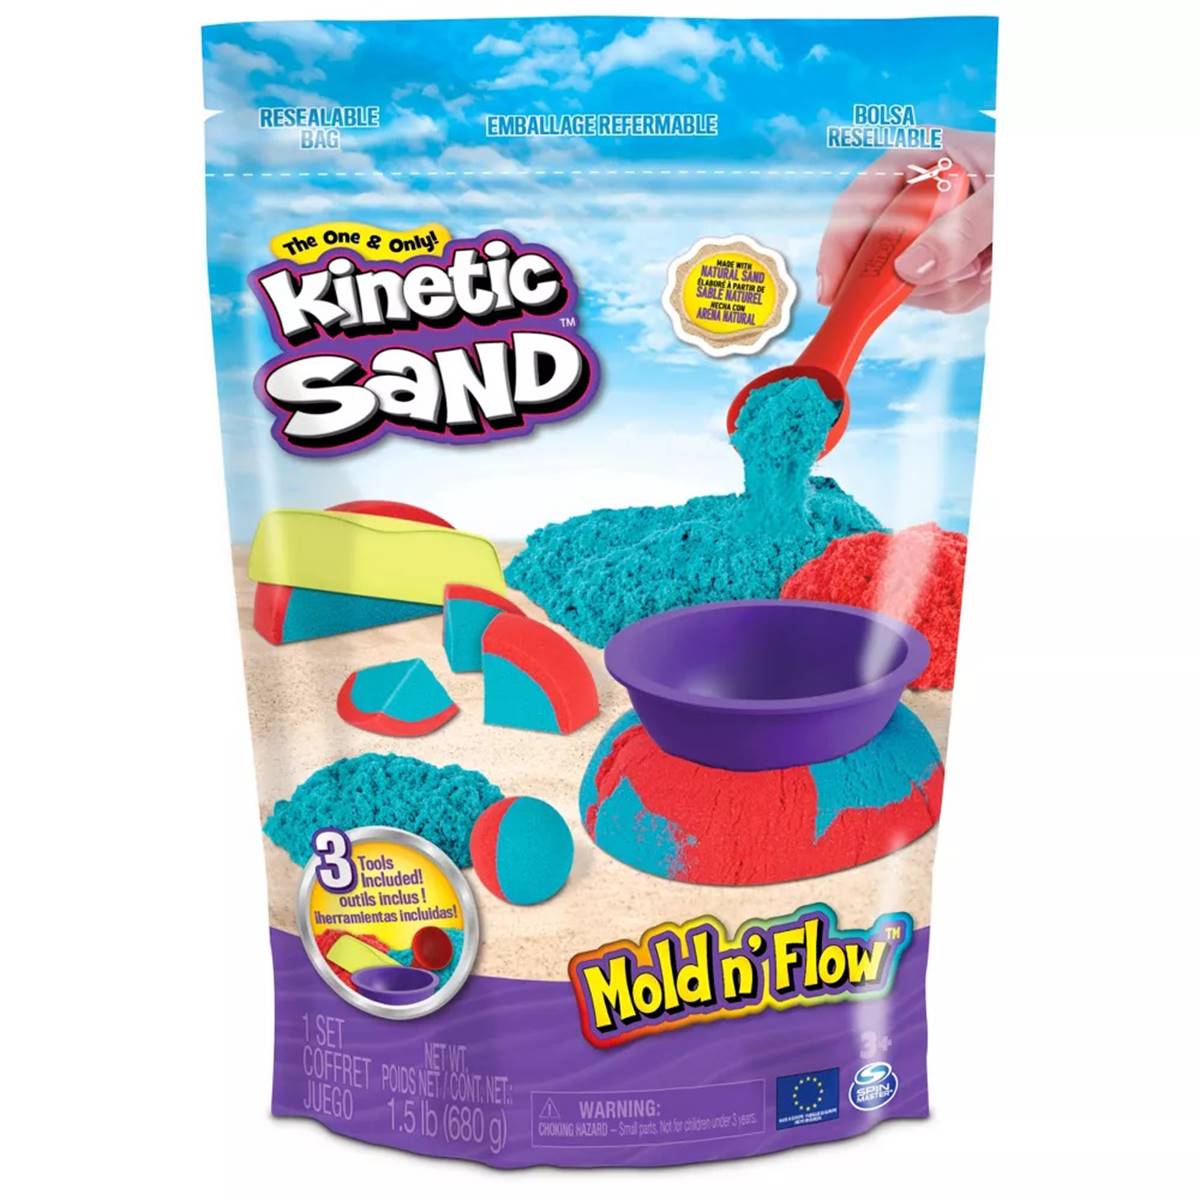 Kinetic Sand Mold N' Flow Playset